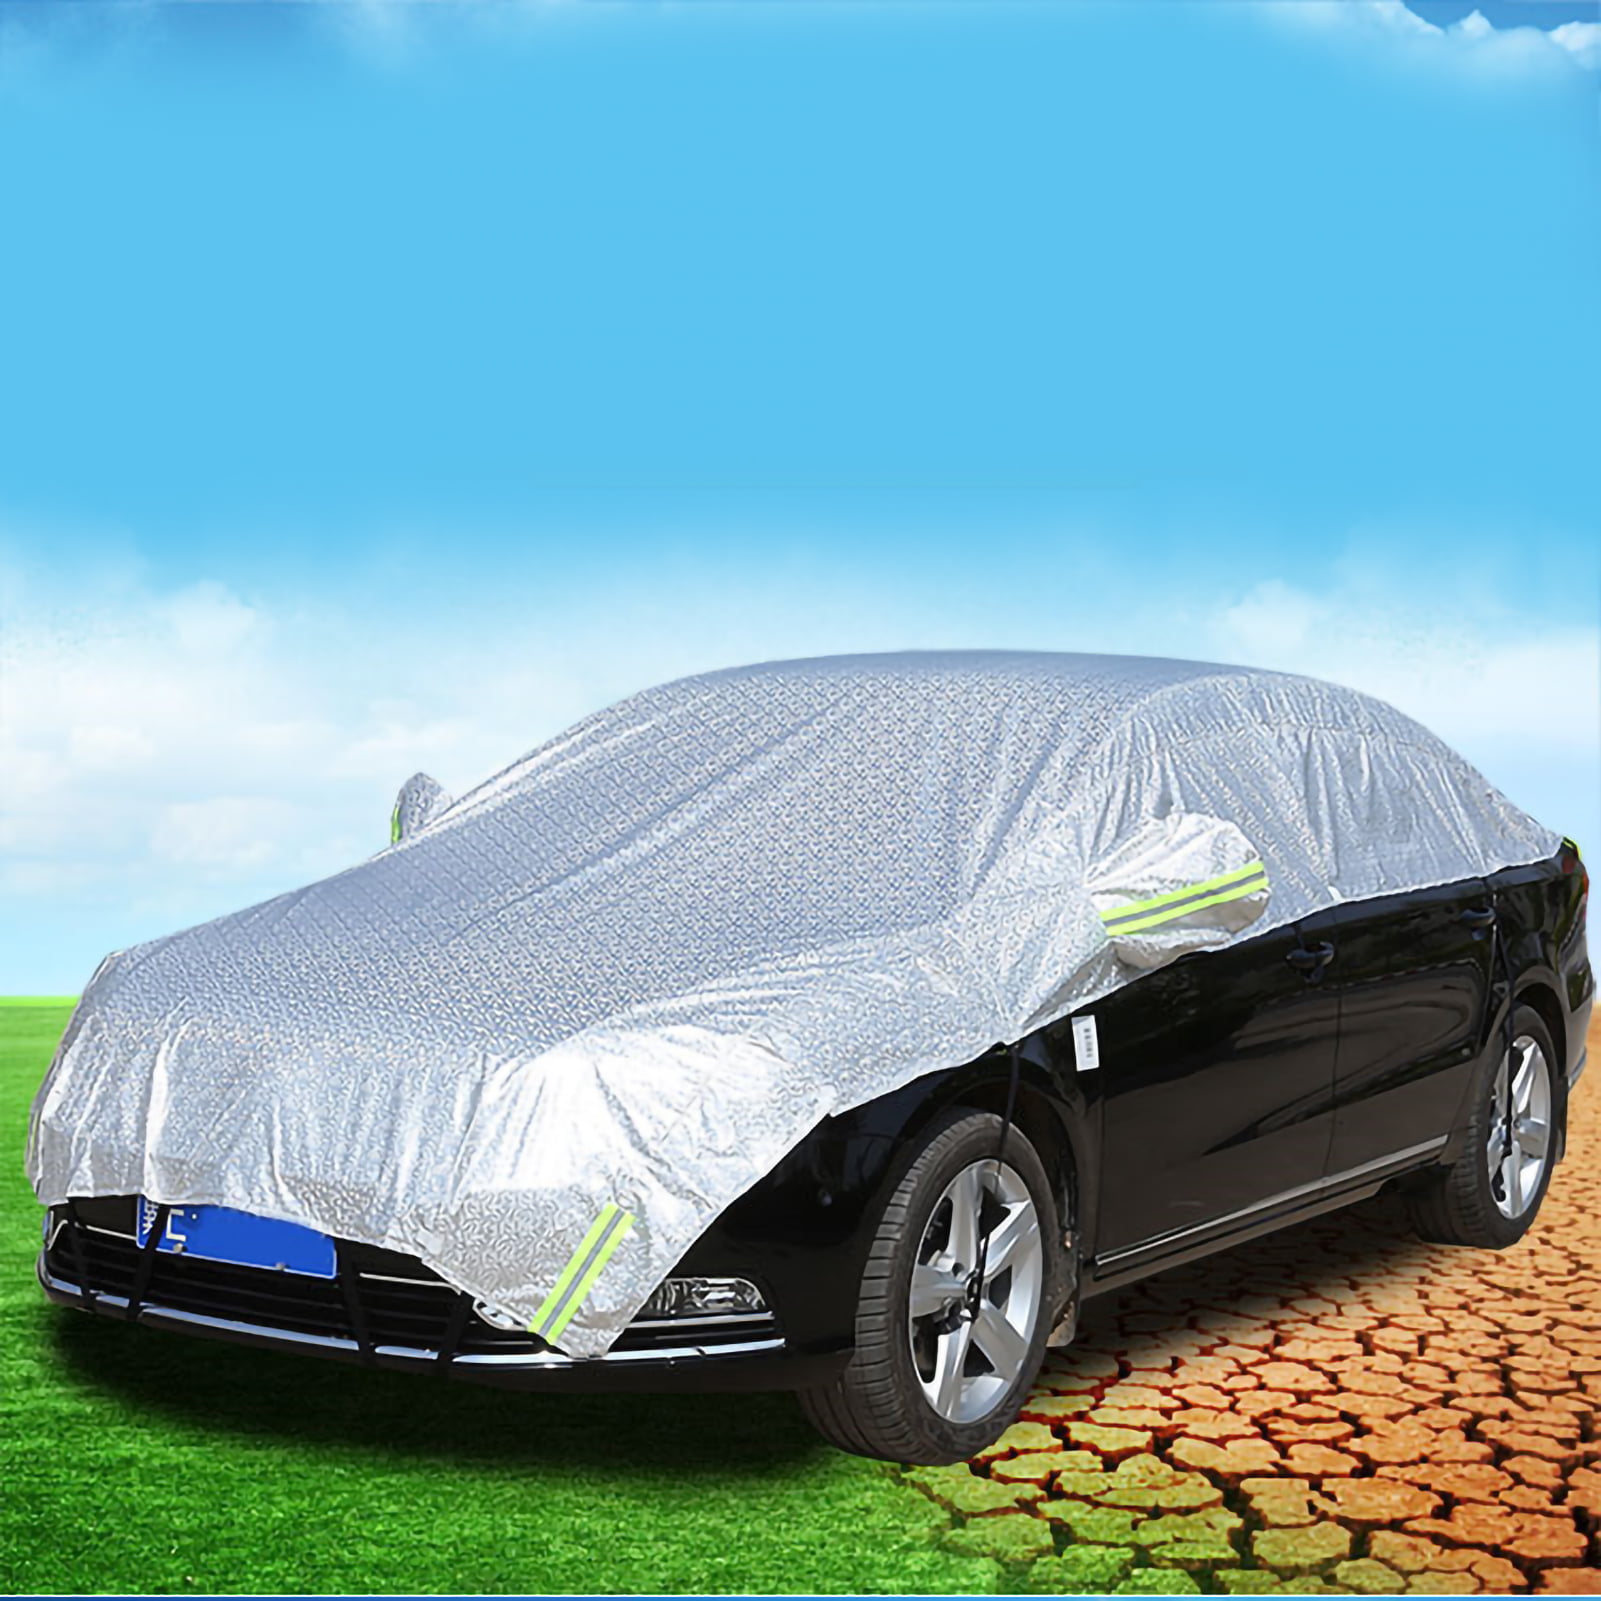 Rainproof Sun Frost Car Half Covers. Waterproof Half cover